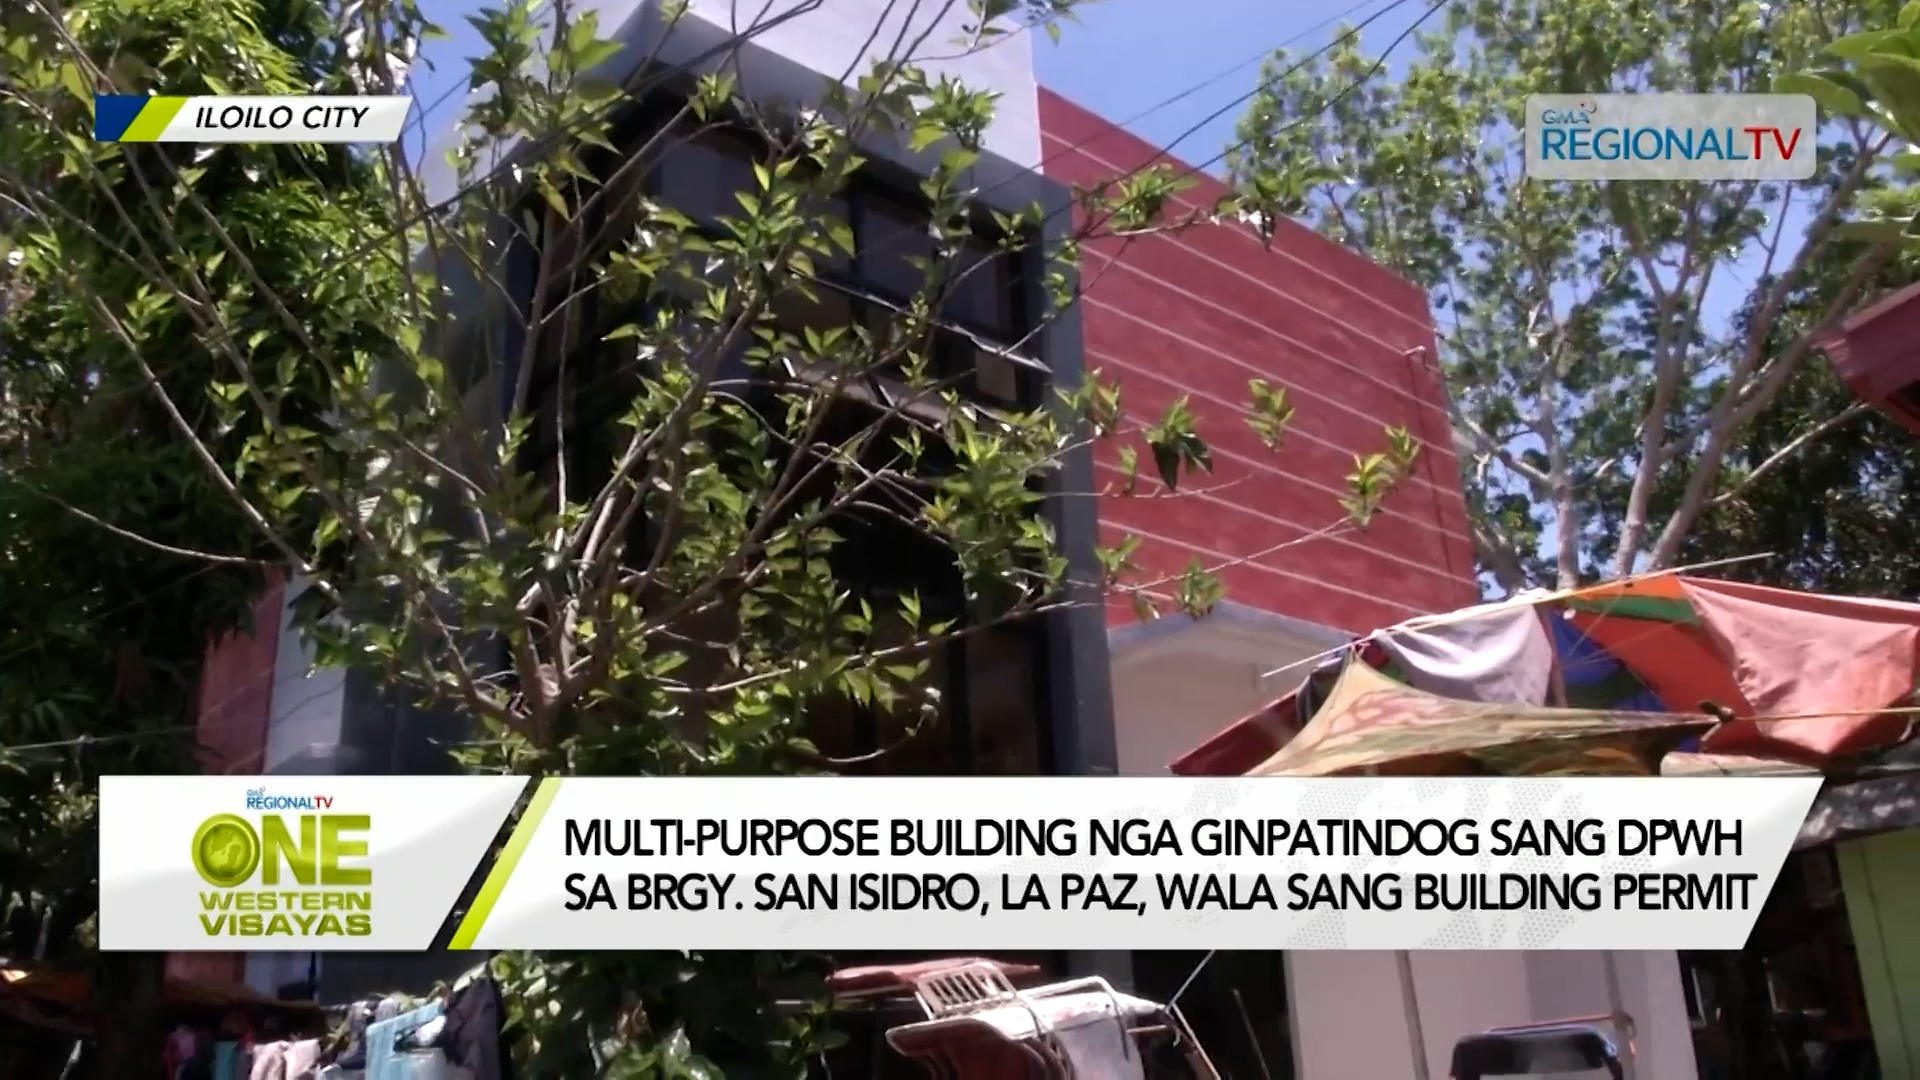 Multi-purpose building sa Brgy. San Isidro, La Paz, wala sang building permit